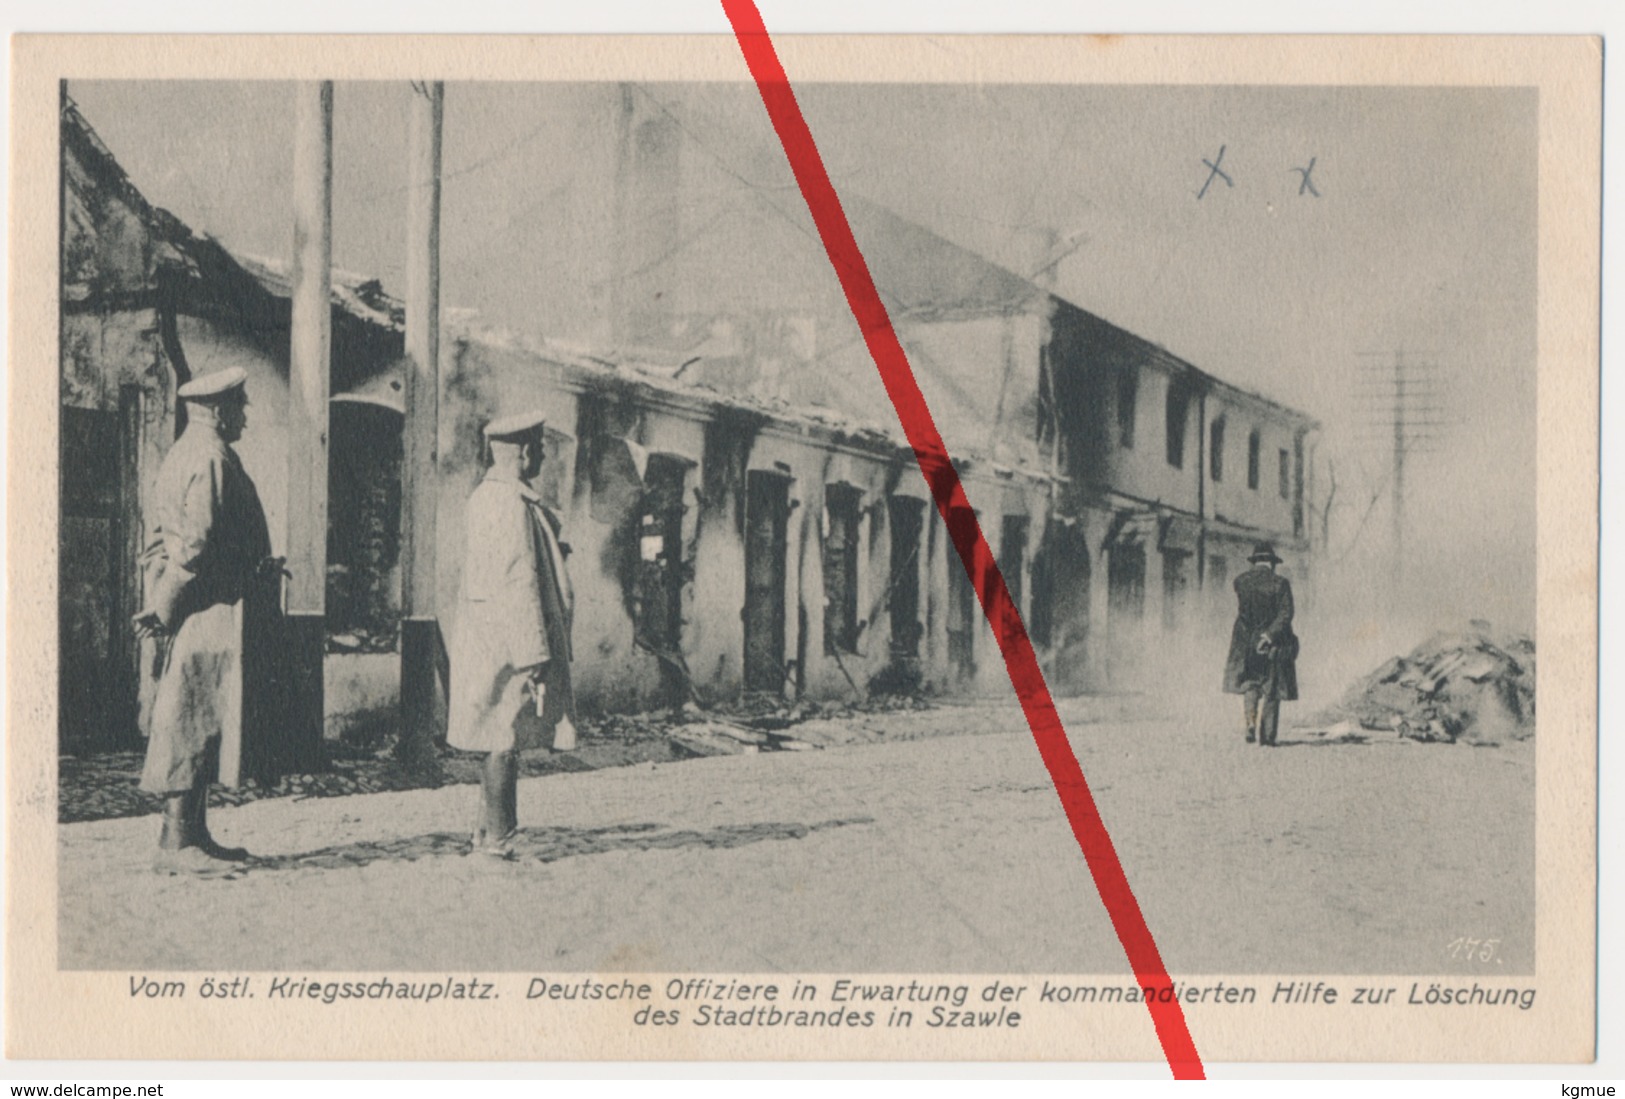 PostCard - Stadtbrand Schaulen Szawle Šiauliai Šiauliai - Ca. 1915 - Fotograf A. Kühlewind Aus Königsberg - Litauen